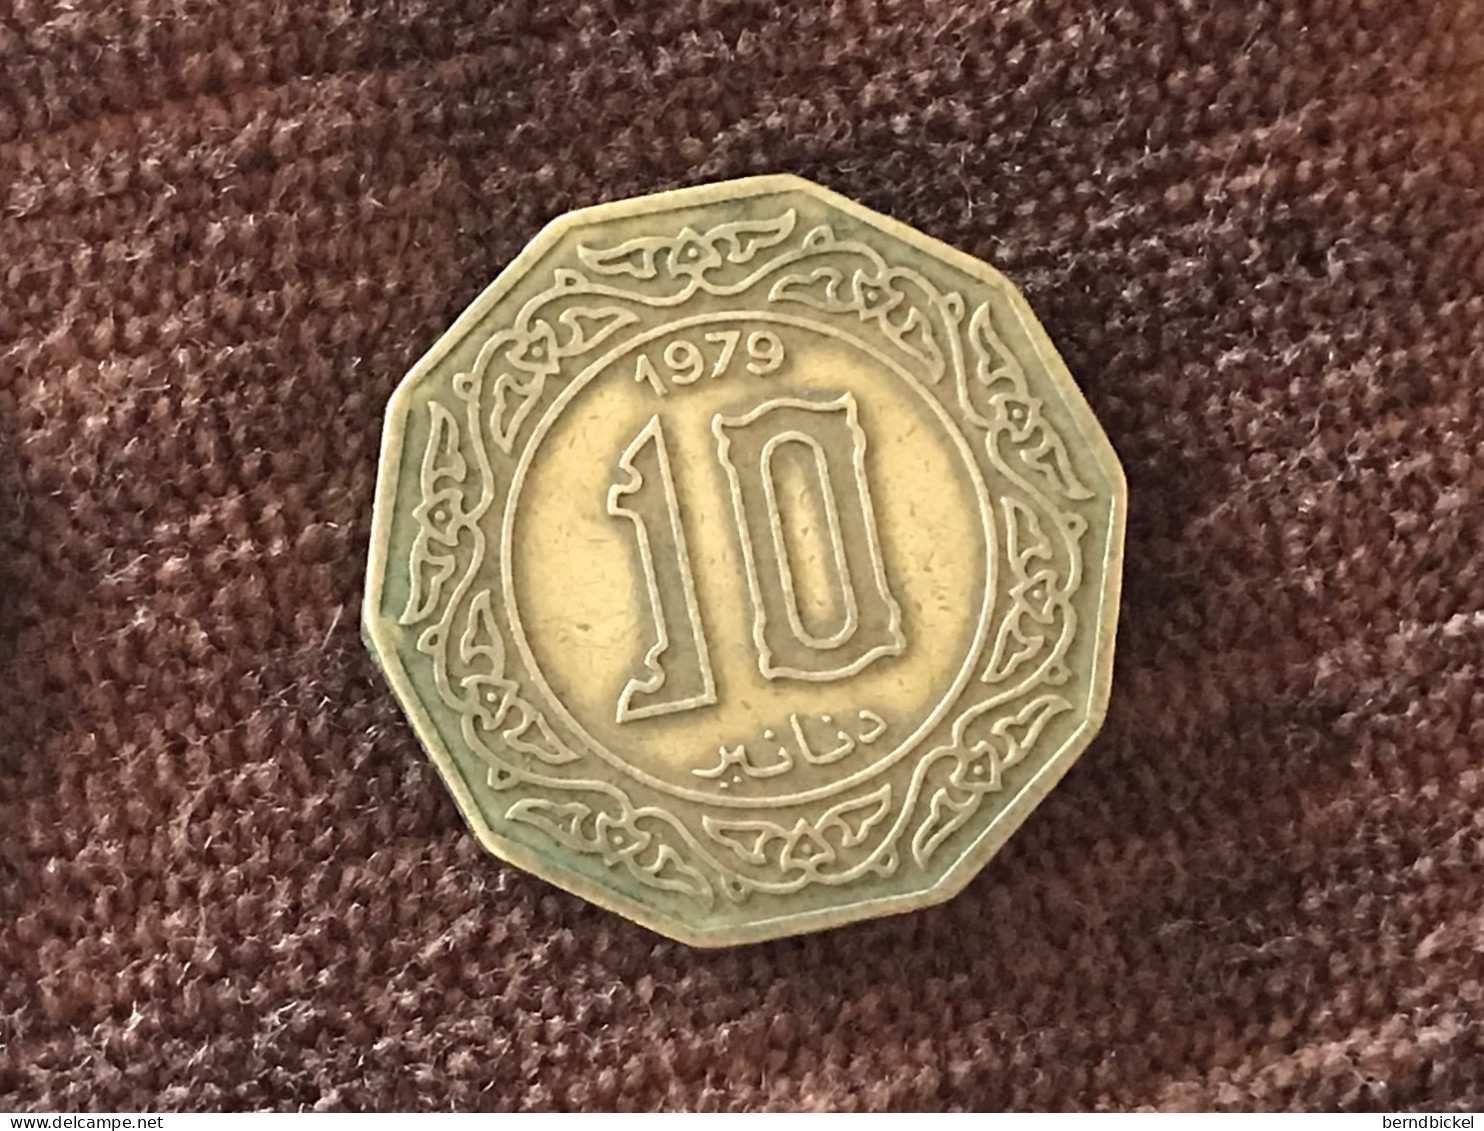 Münze Münzen Umlaufmünze Algerien 10 Dinar 1979 - Algerije